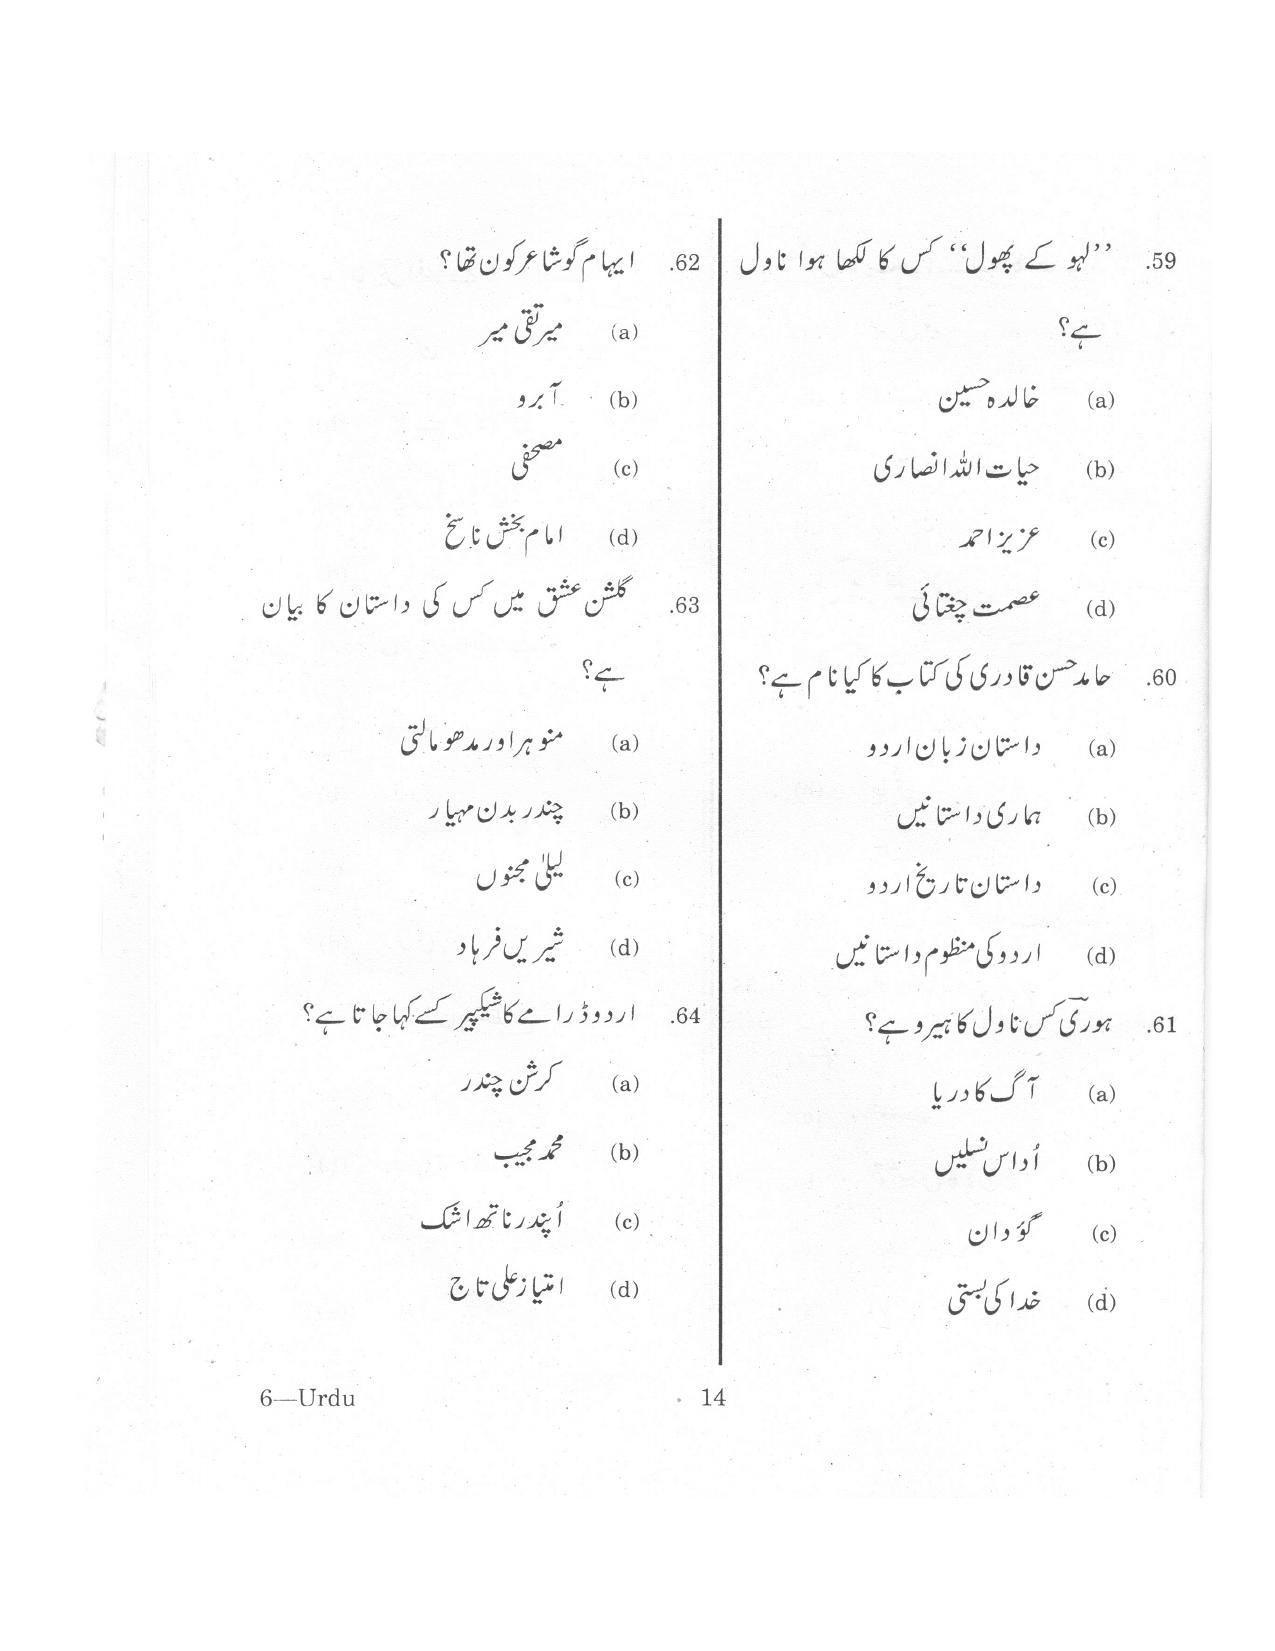 URATPG Urdu 2013 Question Paper - Page 13